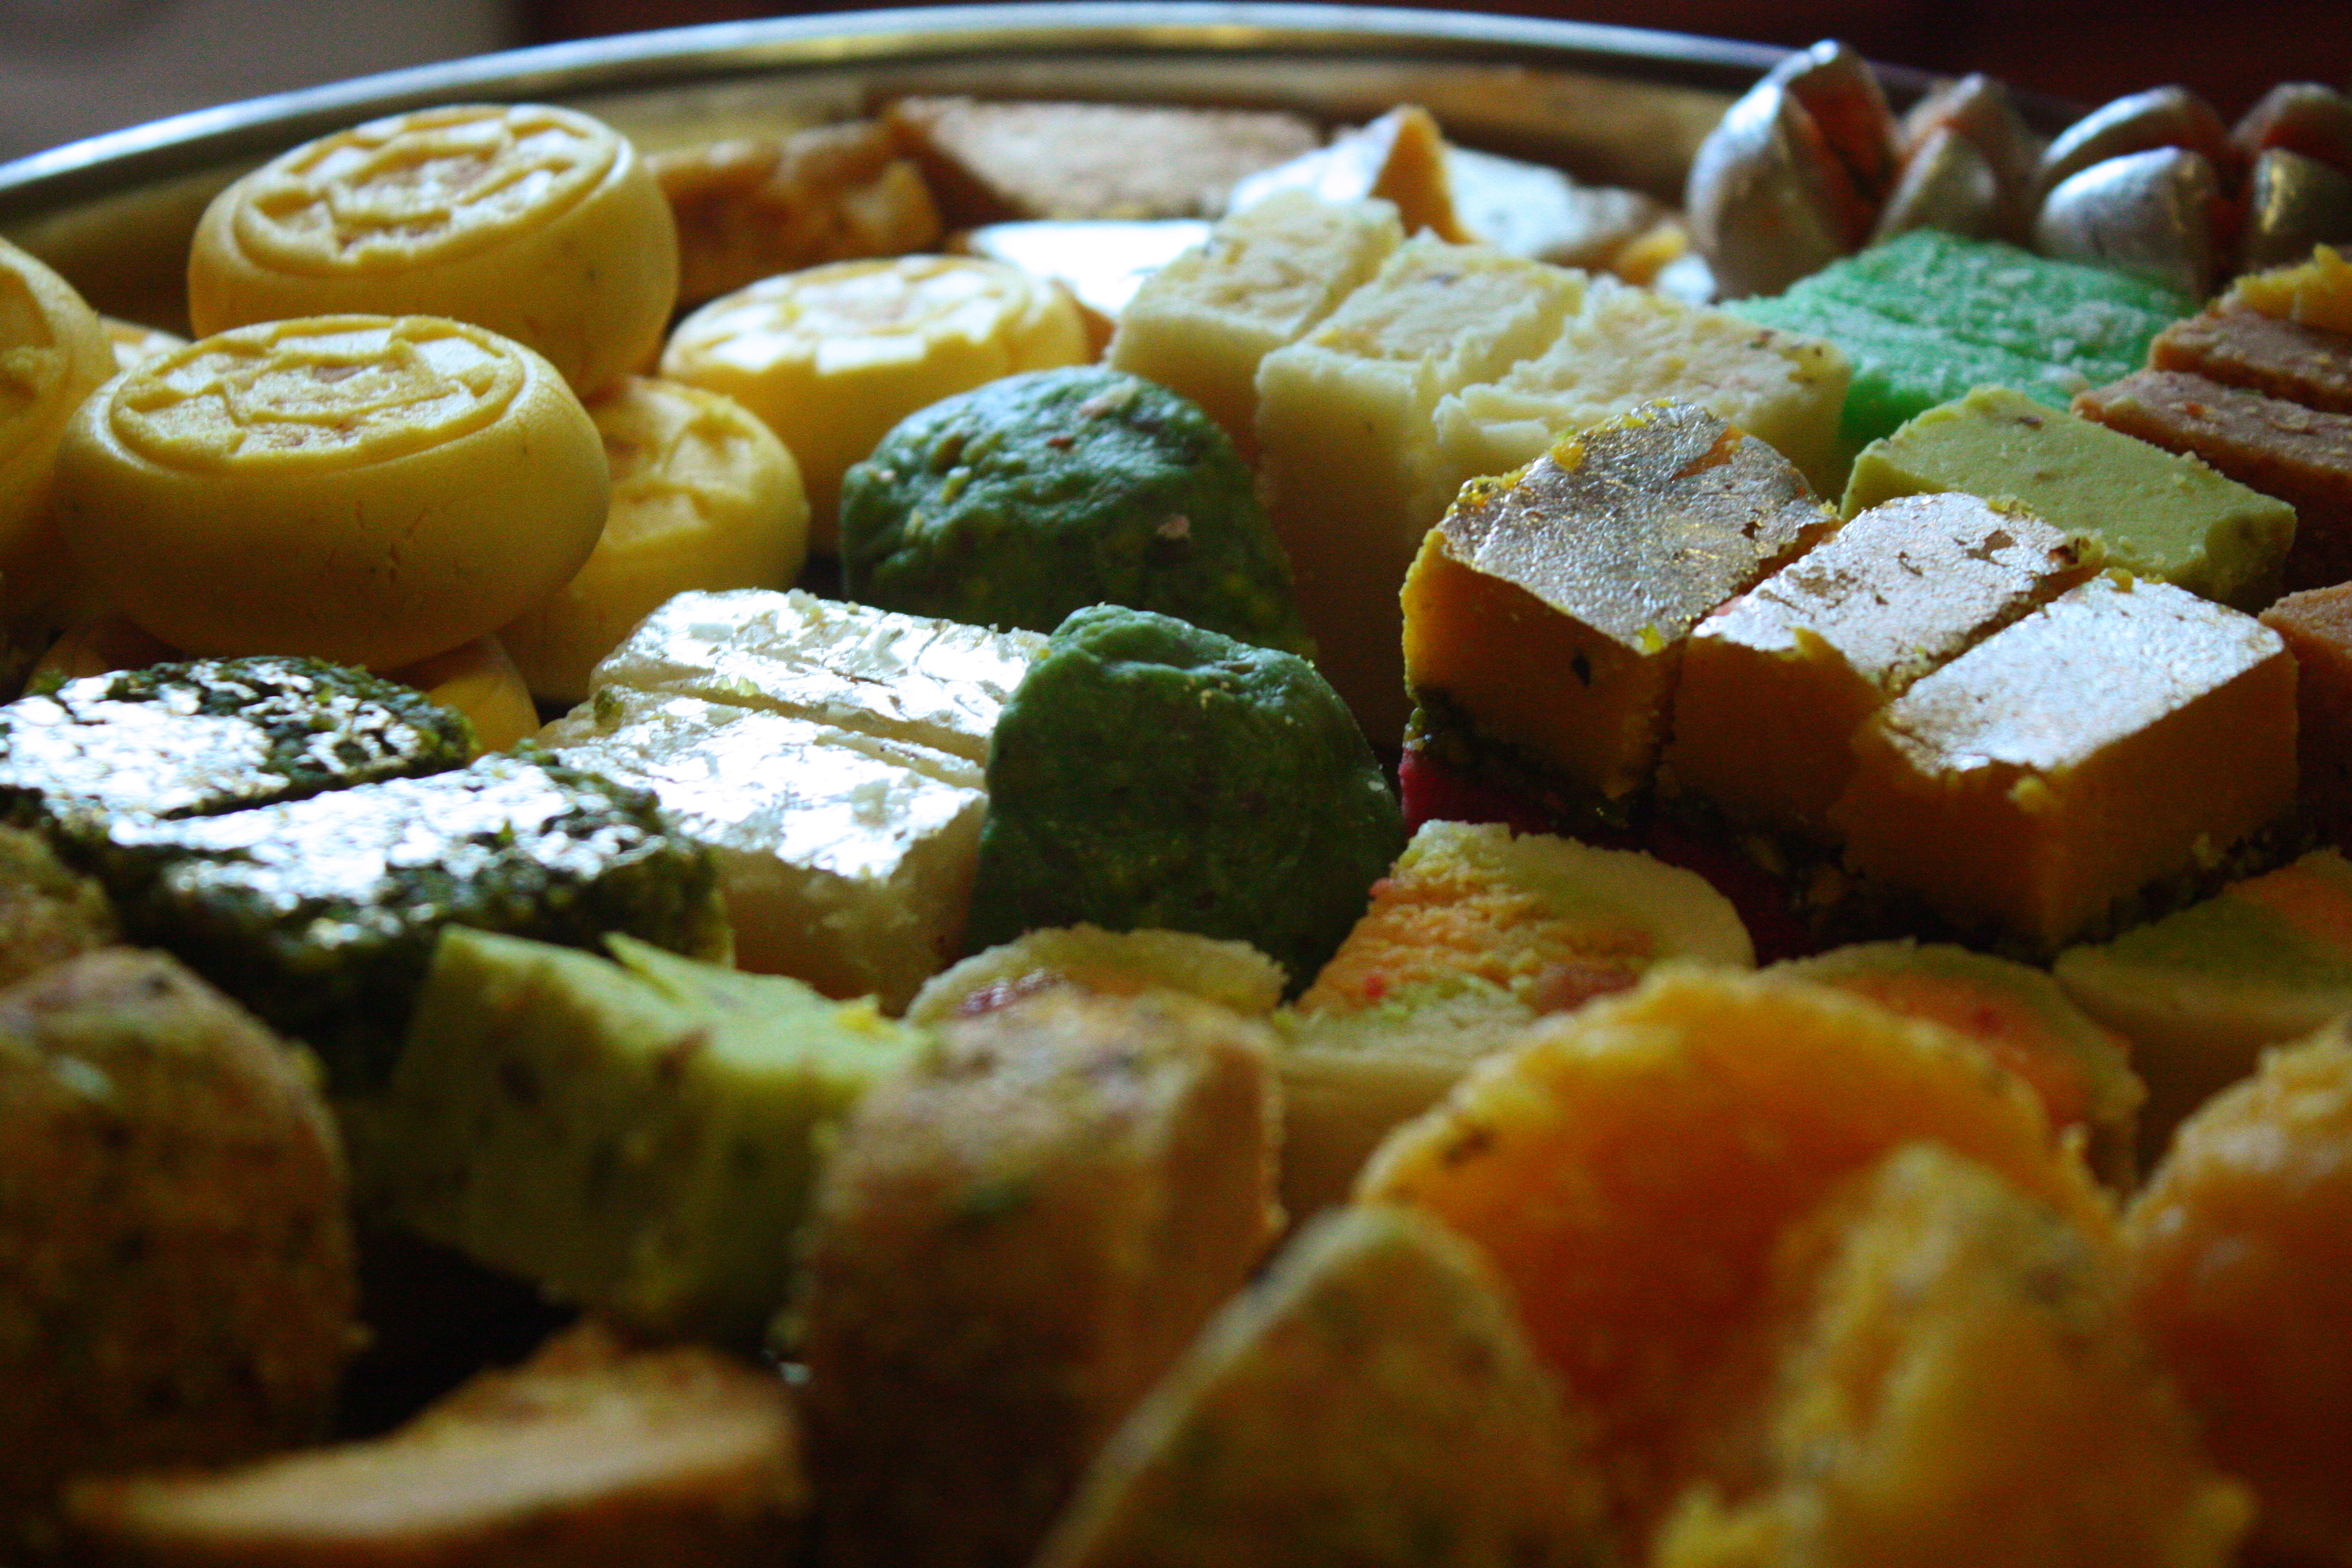 File:Diwali sweets India 2009.jpg - Wikimedia Commons